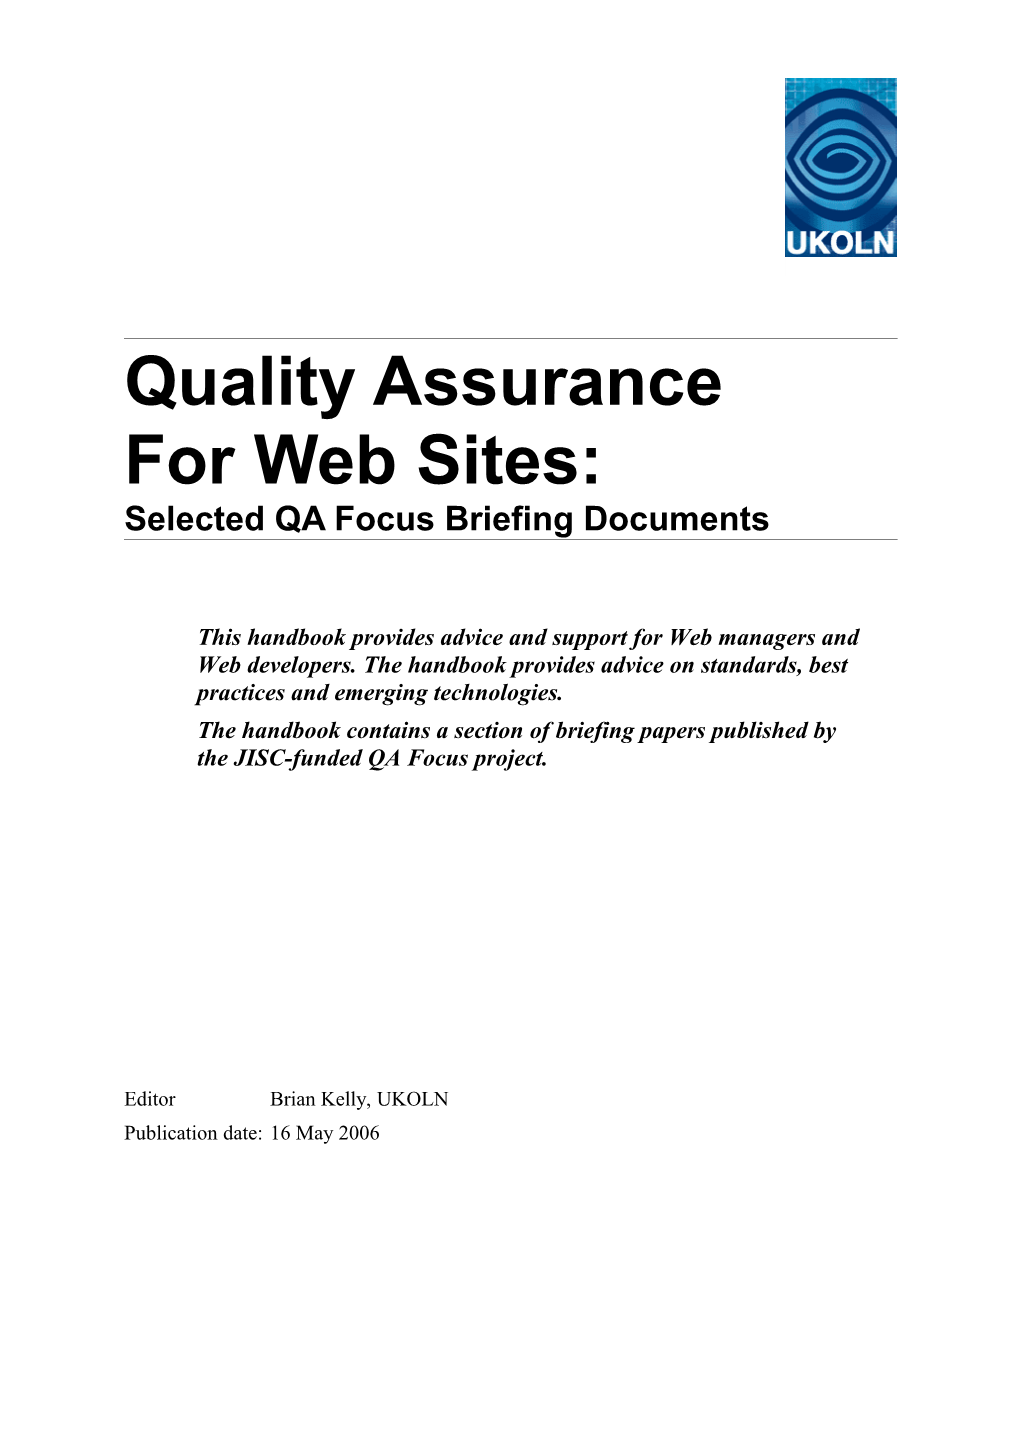 Quality Assurance Handbook: QA for Web